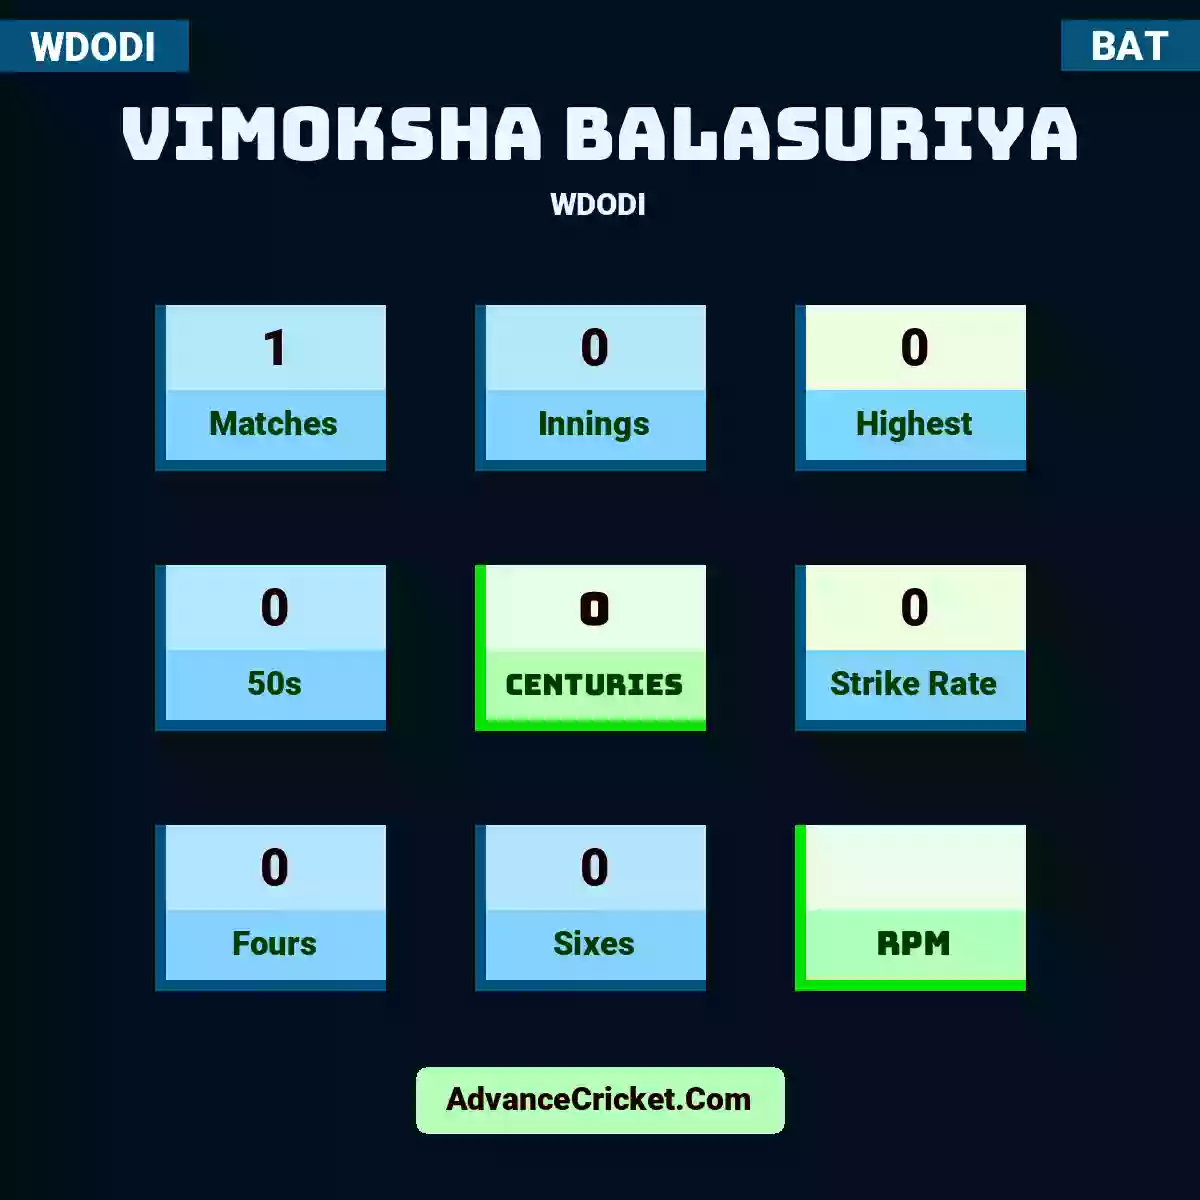 Vimoksha Balasuriya WDODI , Vimoksha Balasuriya played 1 matches, scored 0 runs as highest, 0 half-centuries, and 0 centuries, with a strike rate of 0. V.Balasuriya hit 0 fours and 0 sixes.